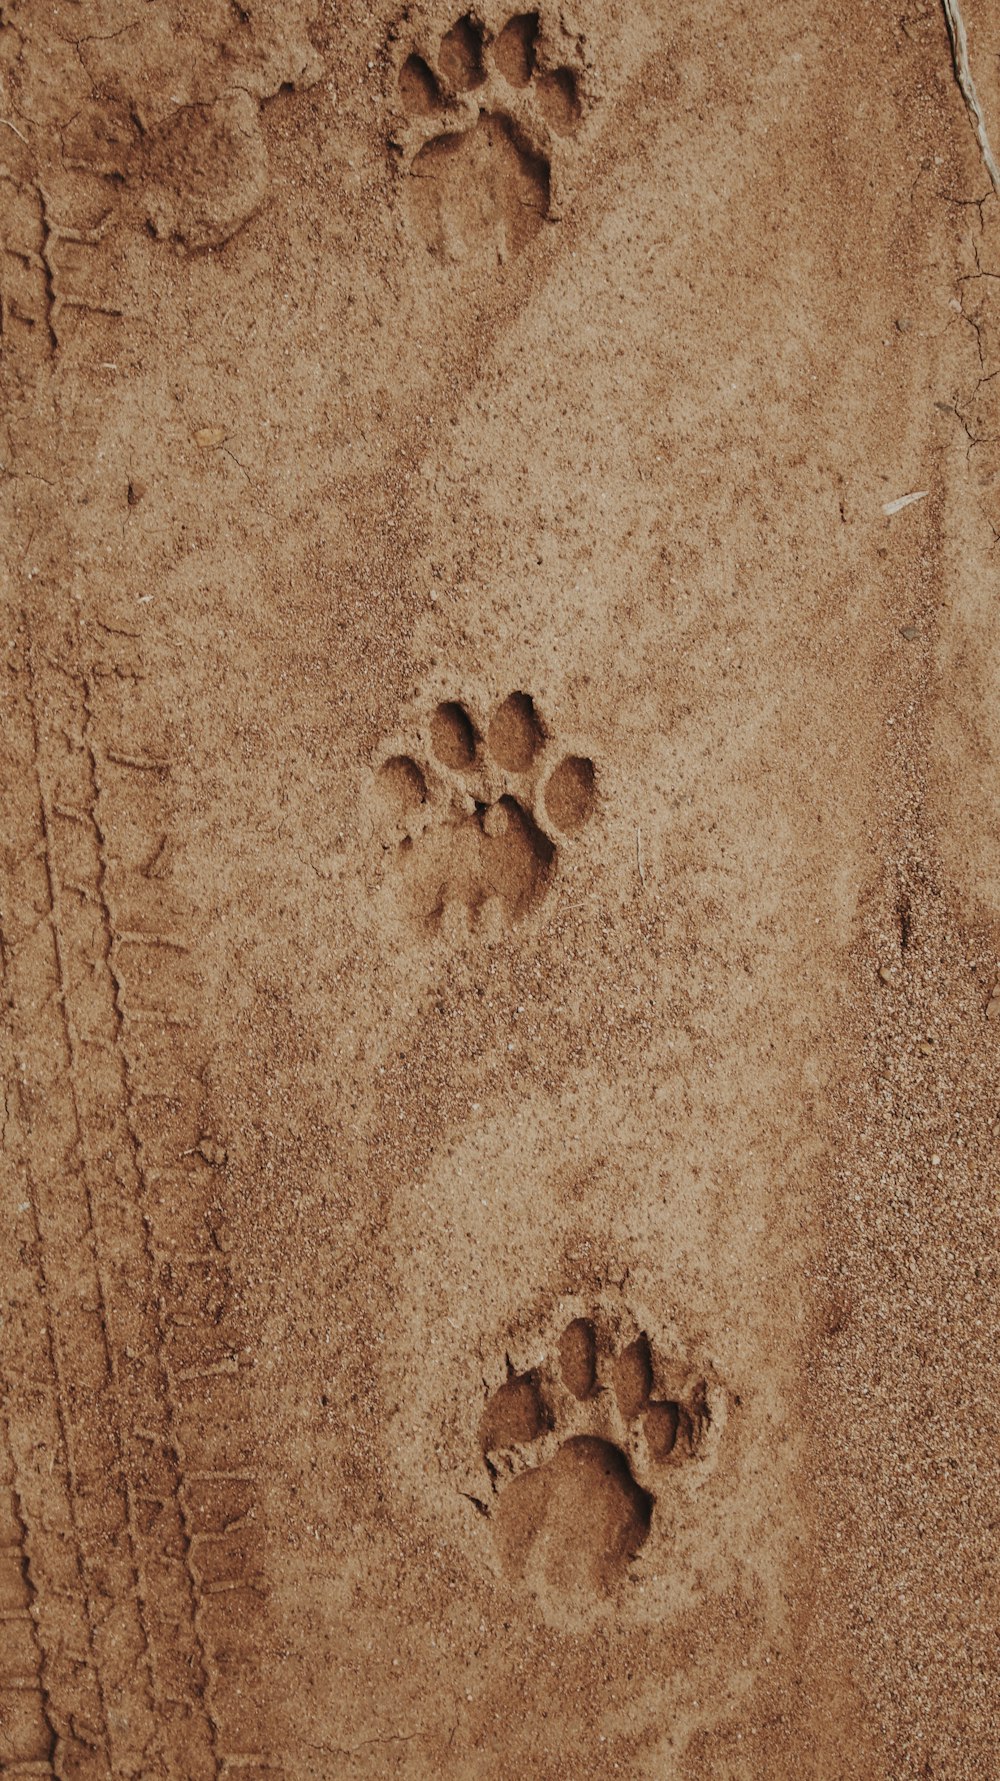 paw print on sand